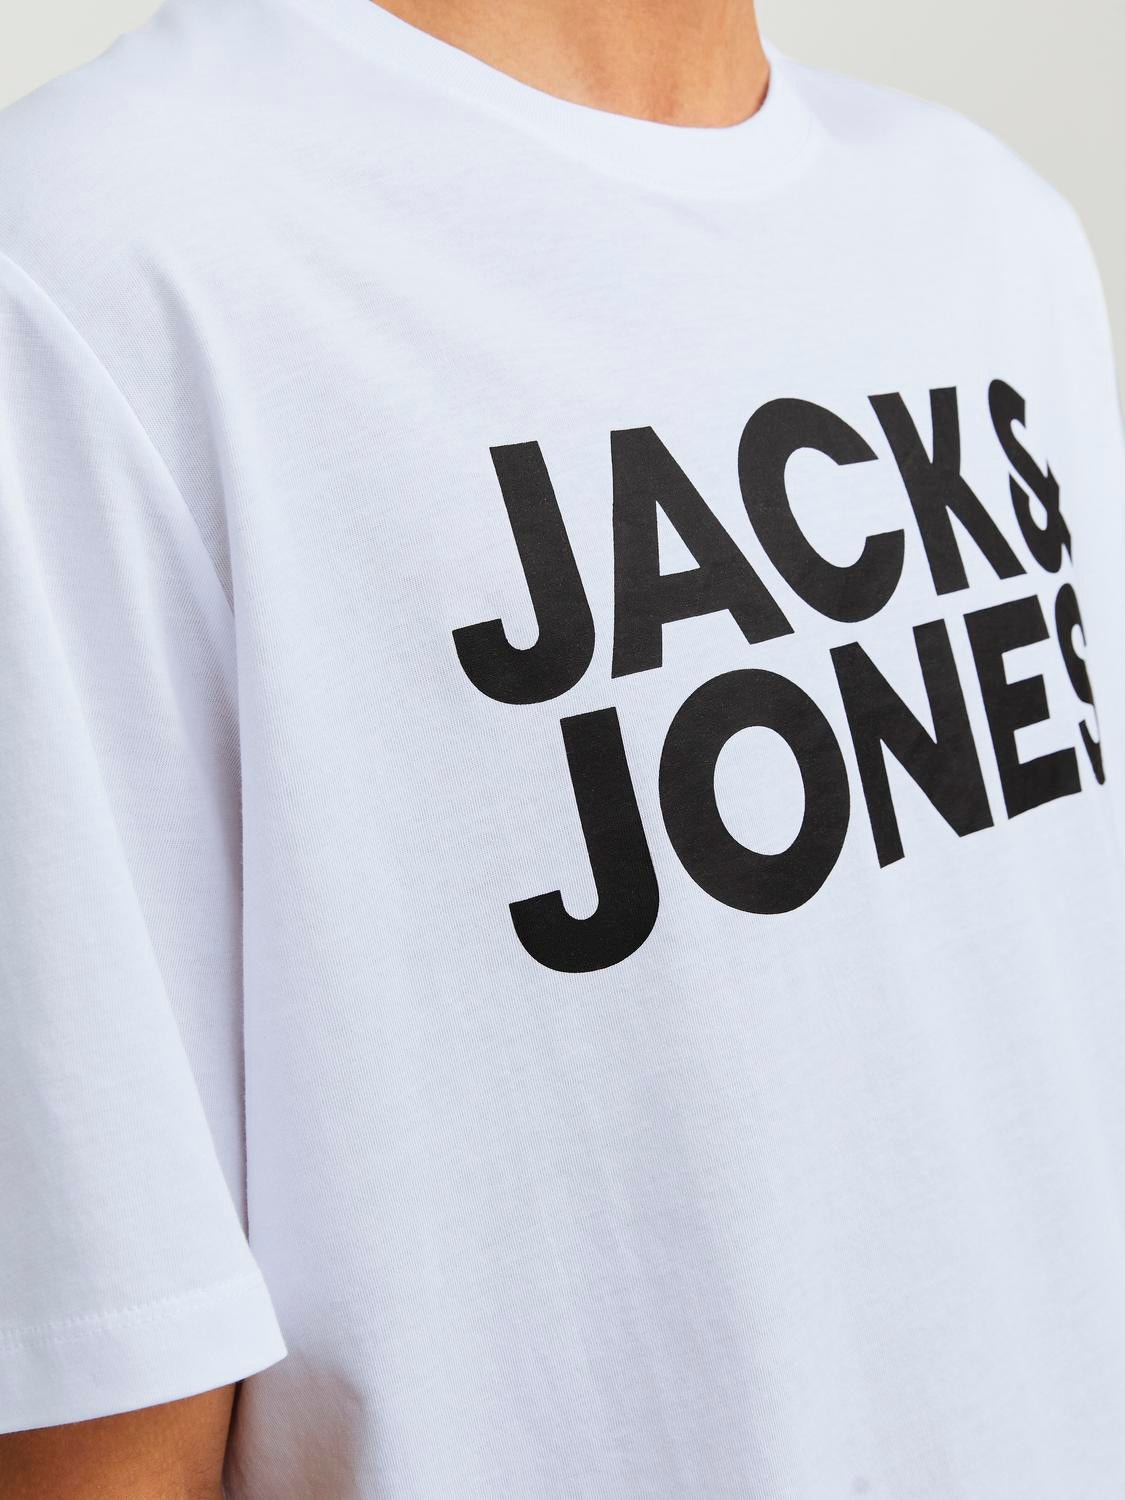 Jack & Jones Camiseta Logotipo Cuello redondo -White - 12151955